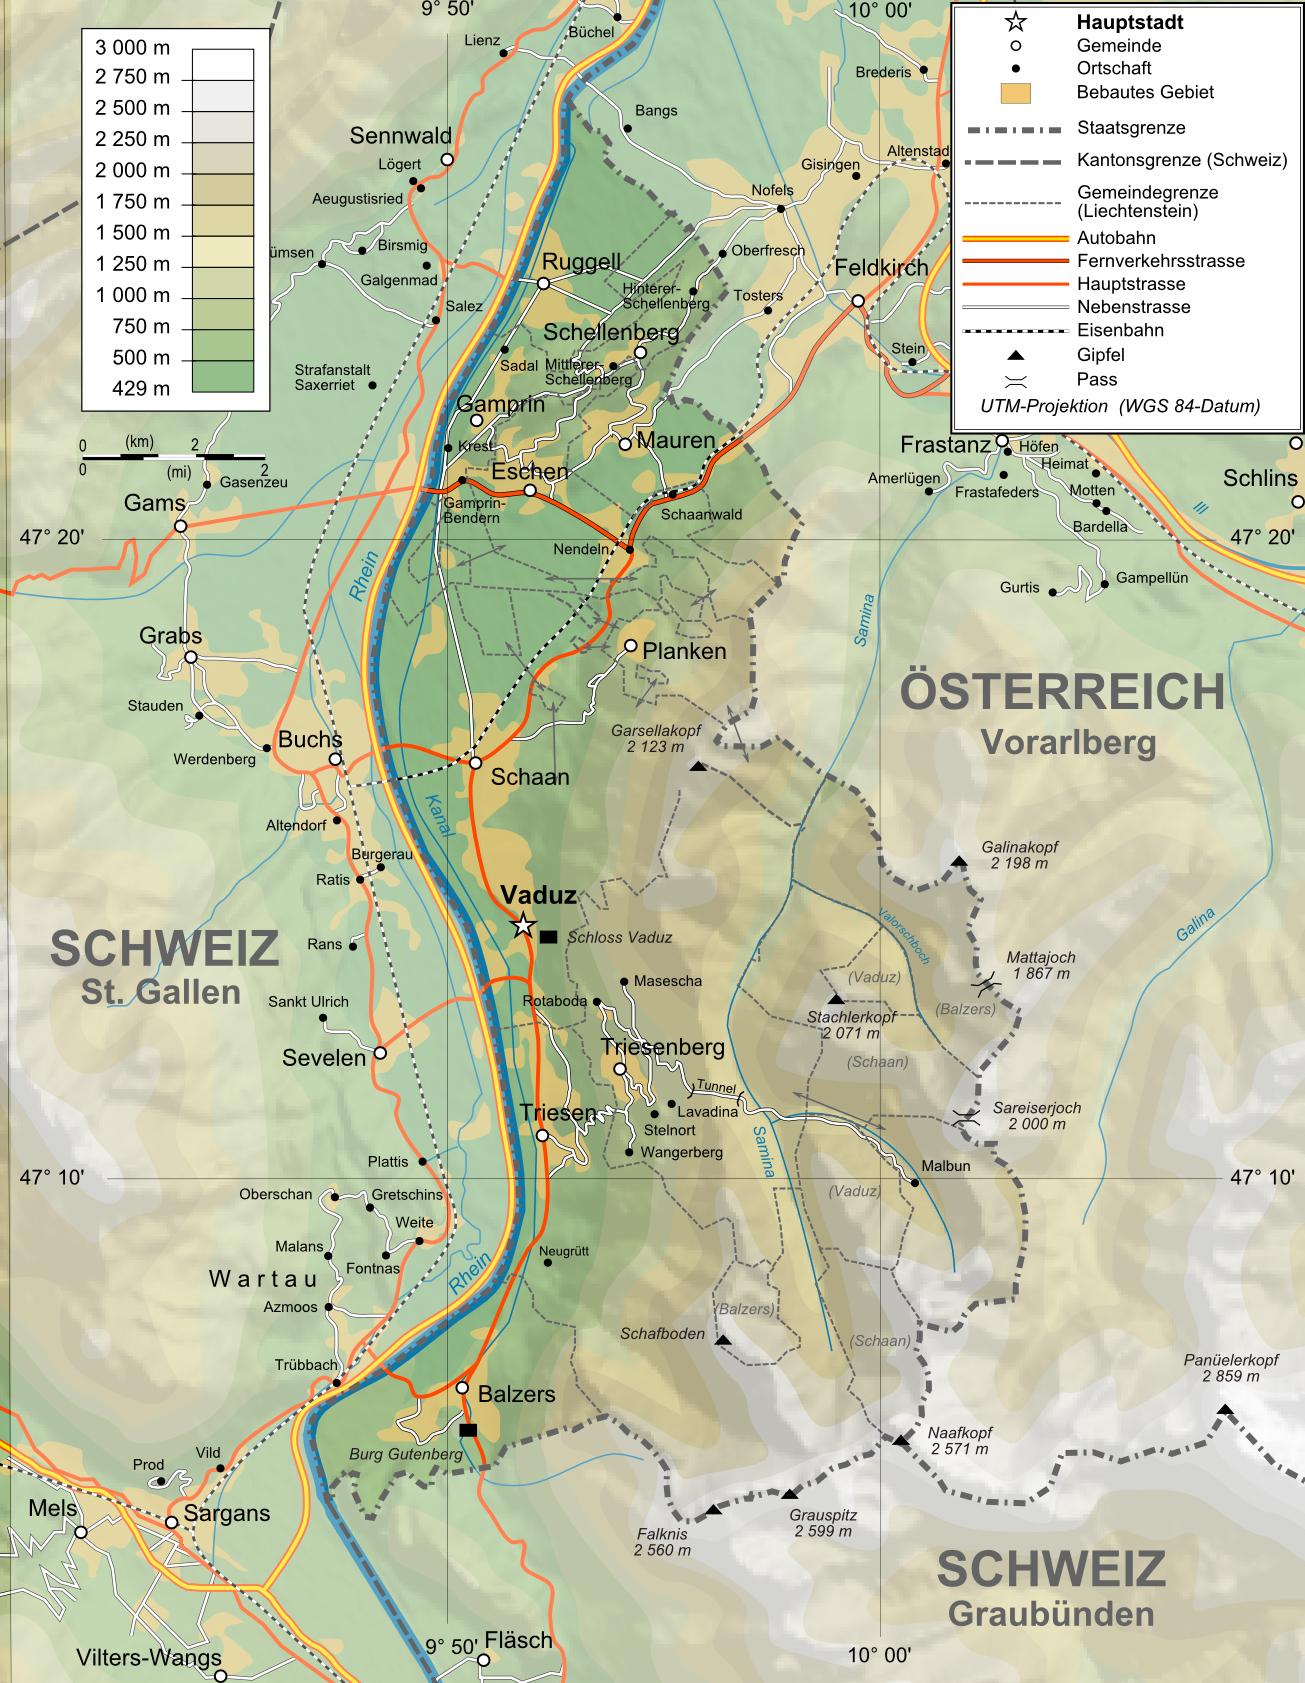 topographical-map-of-liechtenstein.jpg